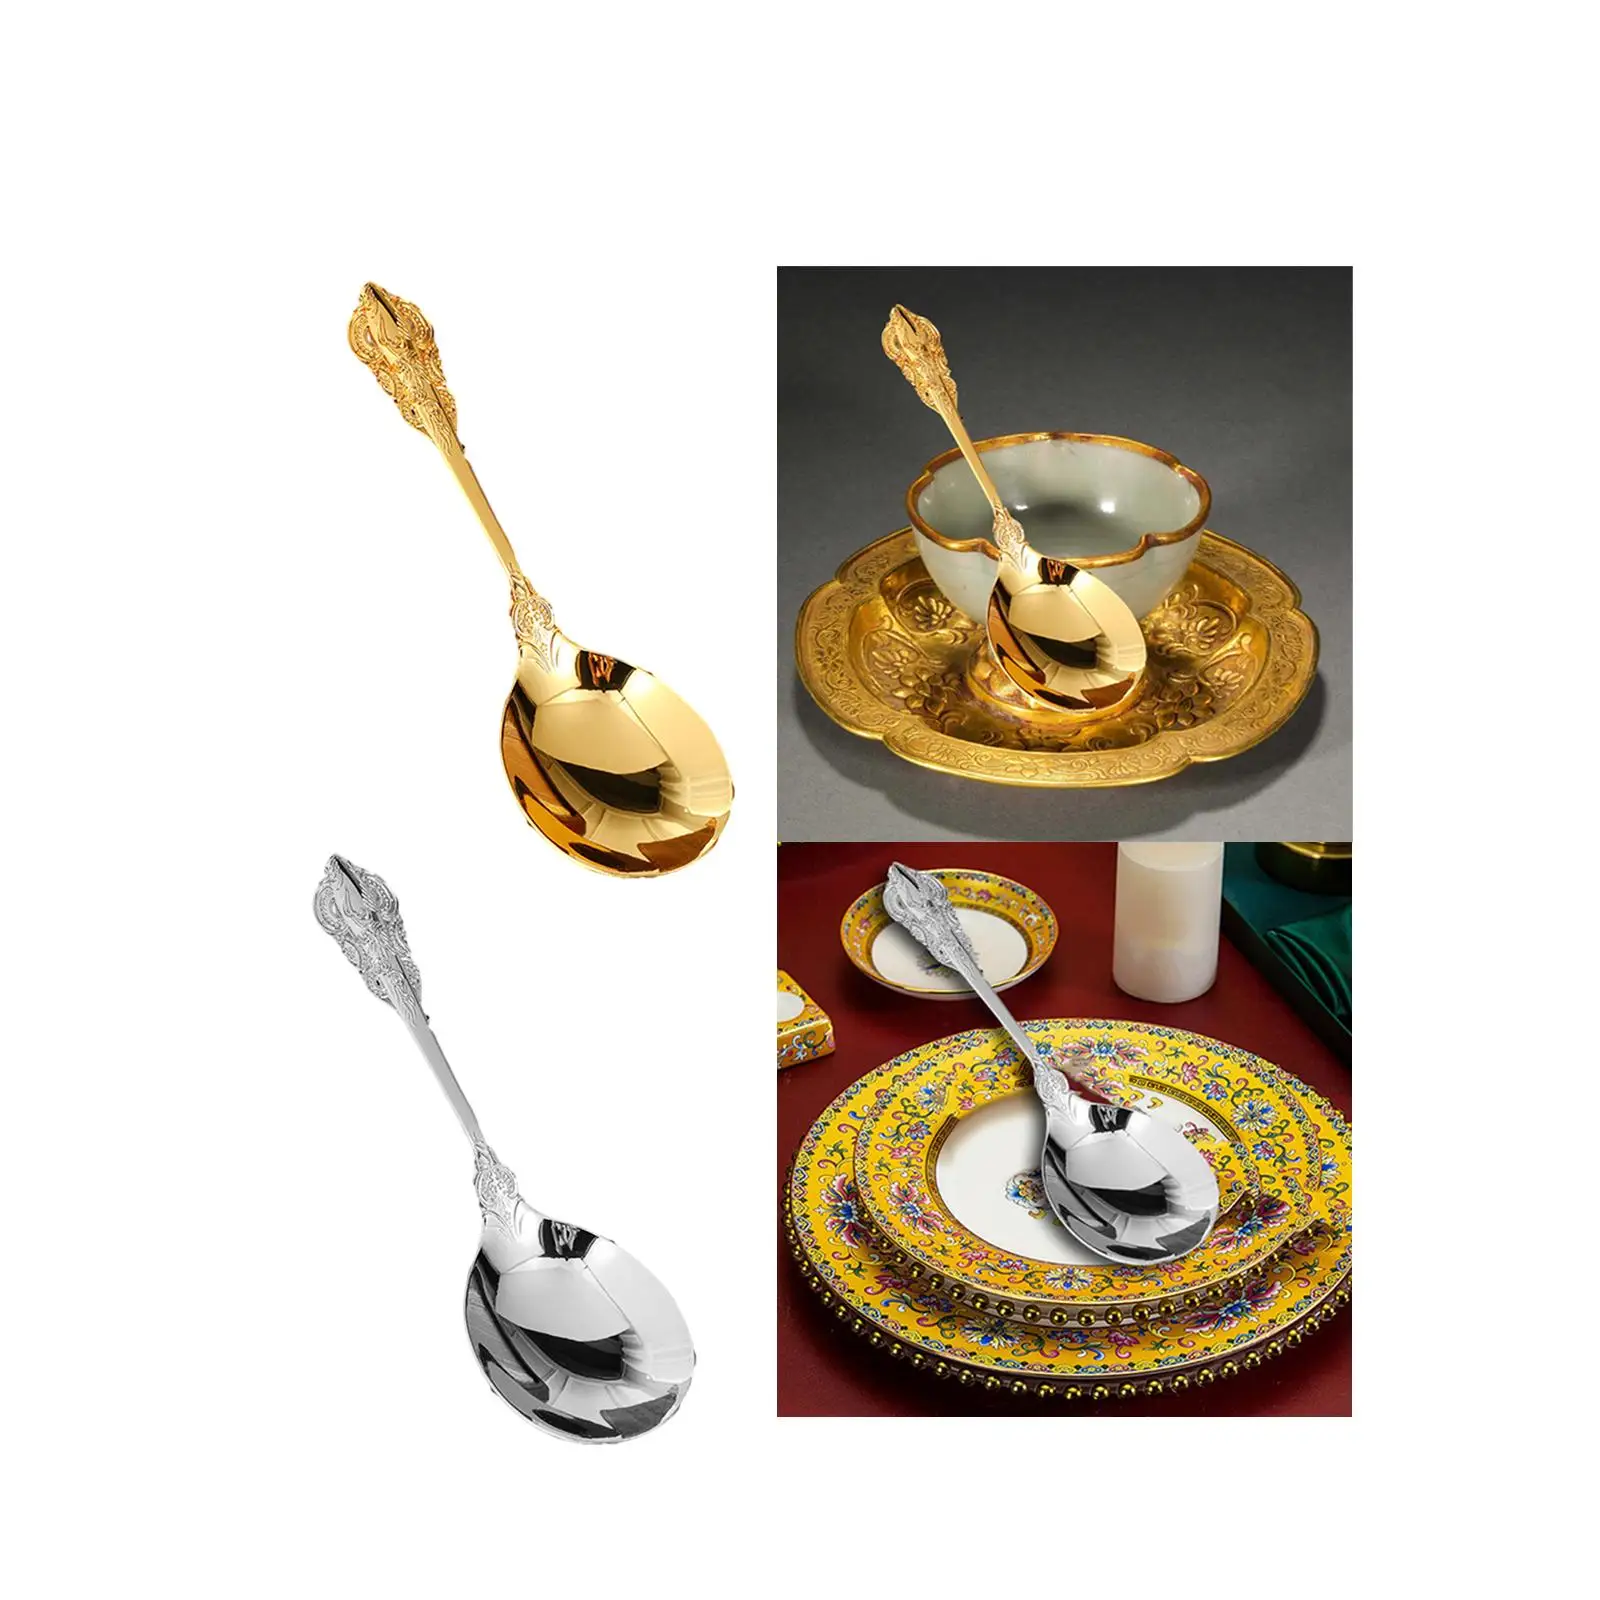 Catering Spoon Serving Spoon, Tableware Metal Embossed Tablespoon Soup Spoon for Cooking, Weddings, Buffet